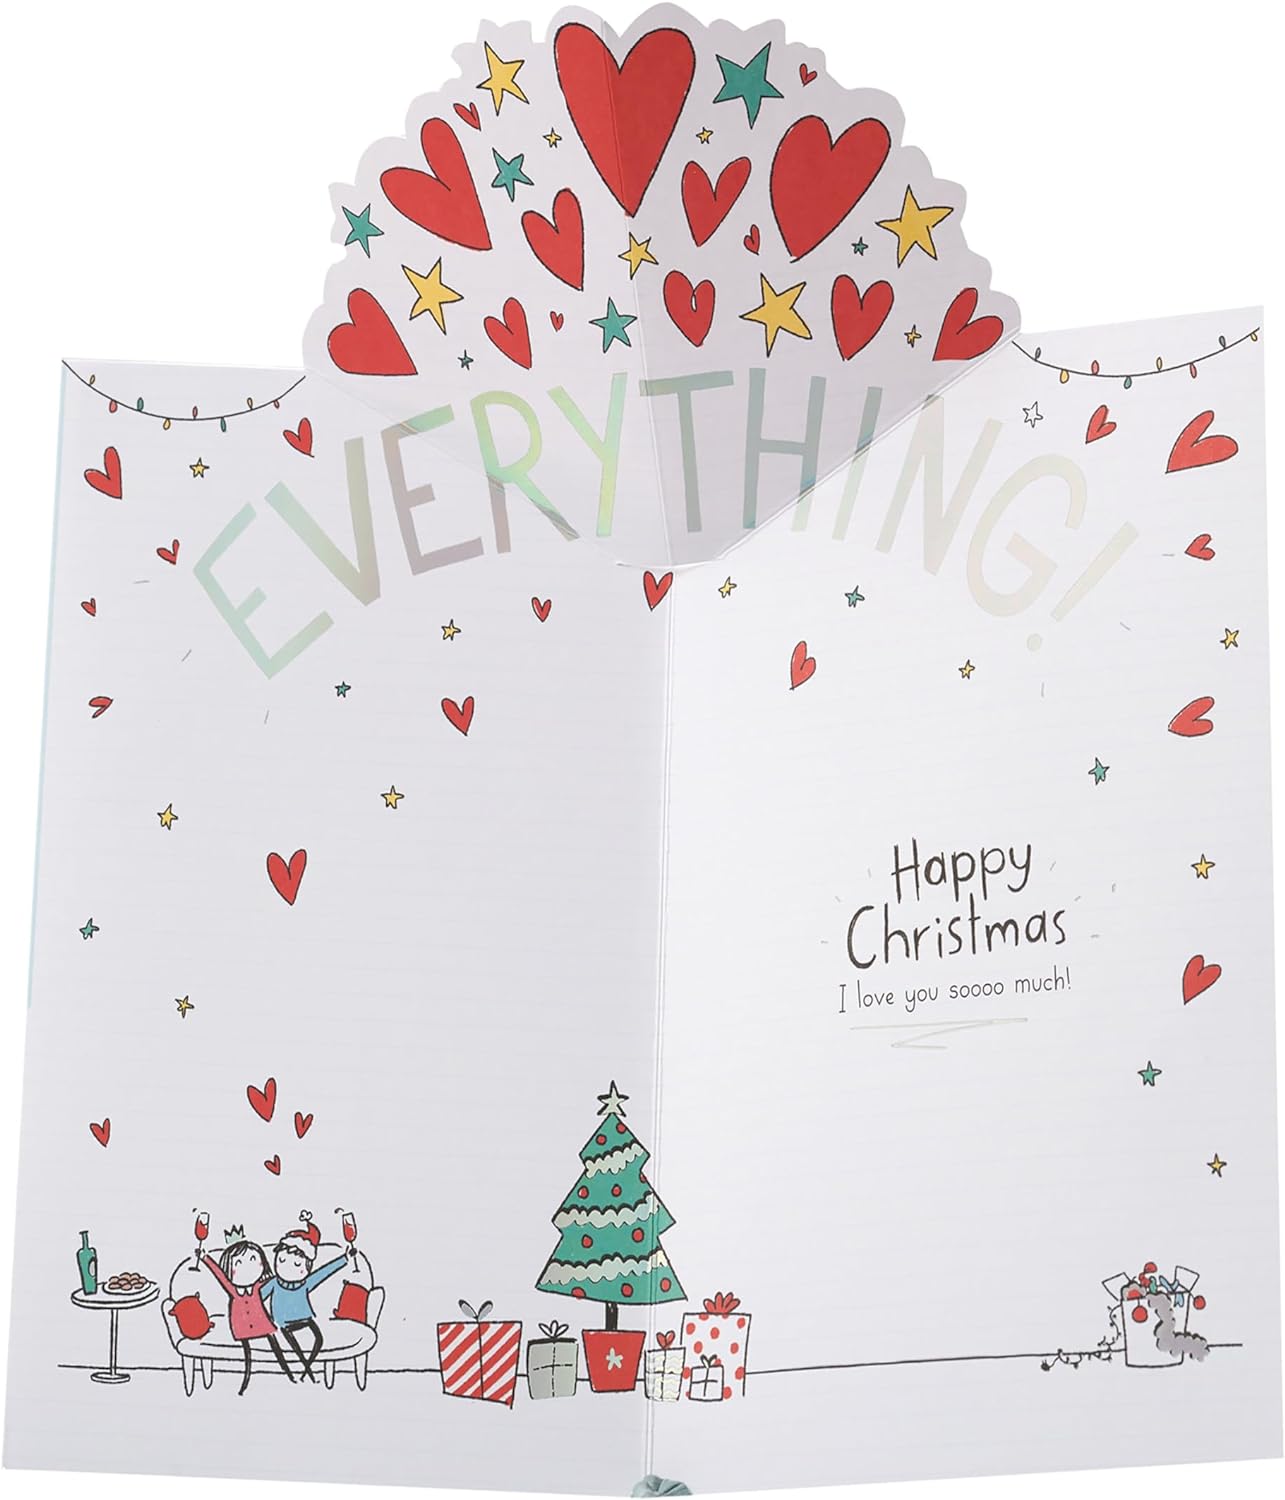 Husband Christmas Card Sweet Sketch Design 